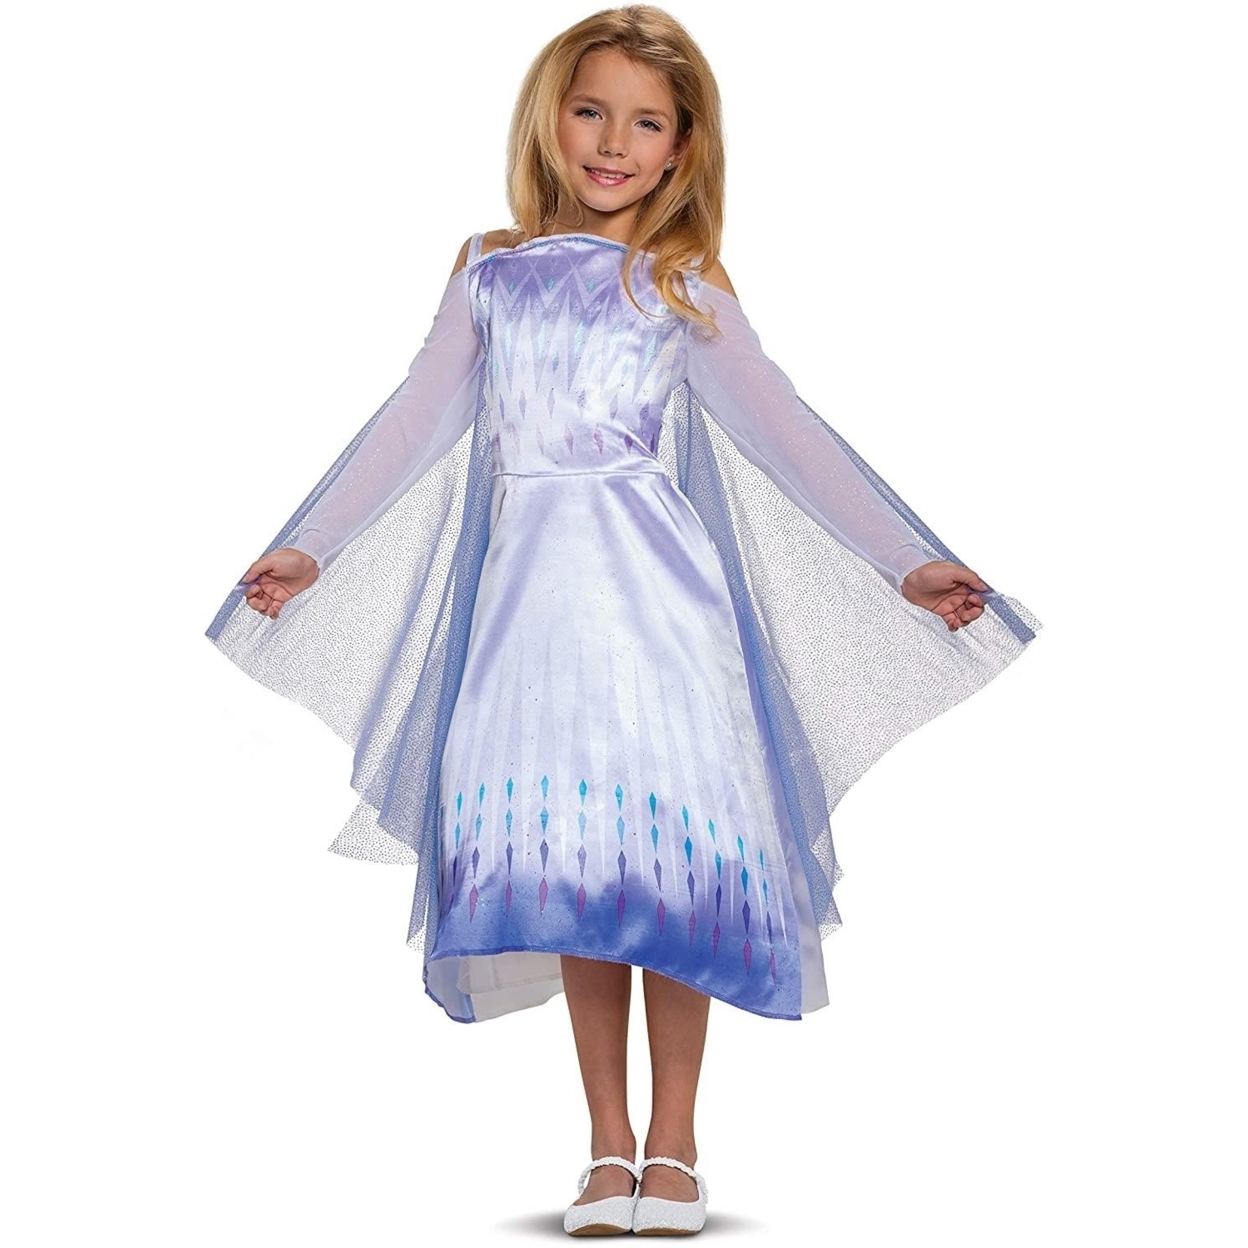 Elsa Classic Girls Size S 4/6X Costume Dress Cape Disney Frozen 2 Snow Queen Disguise